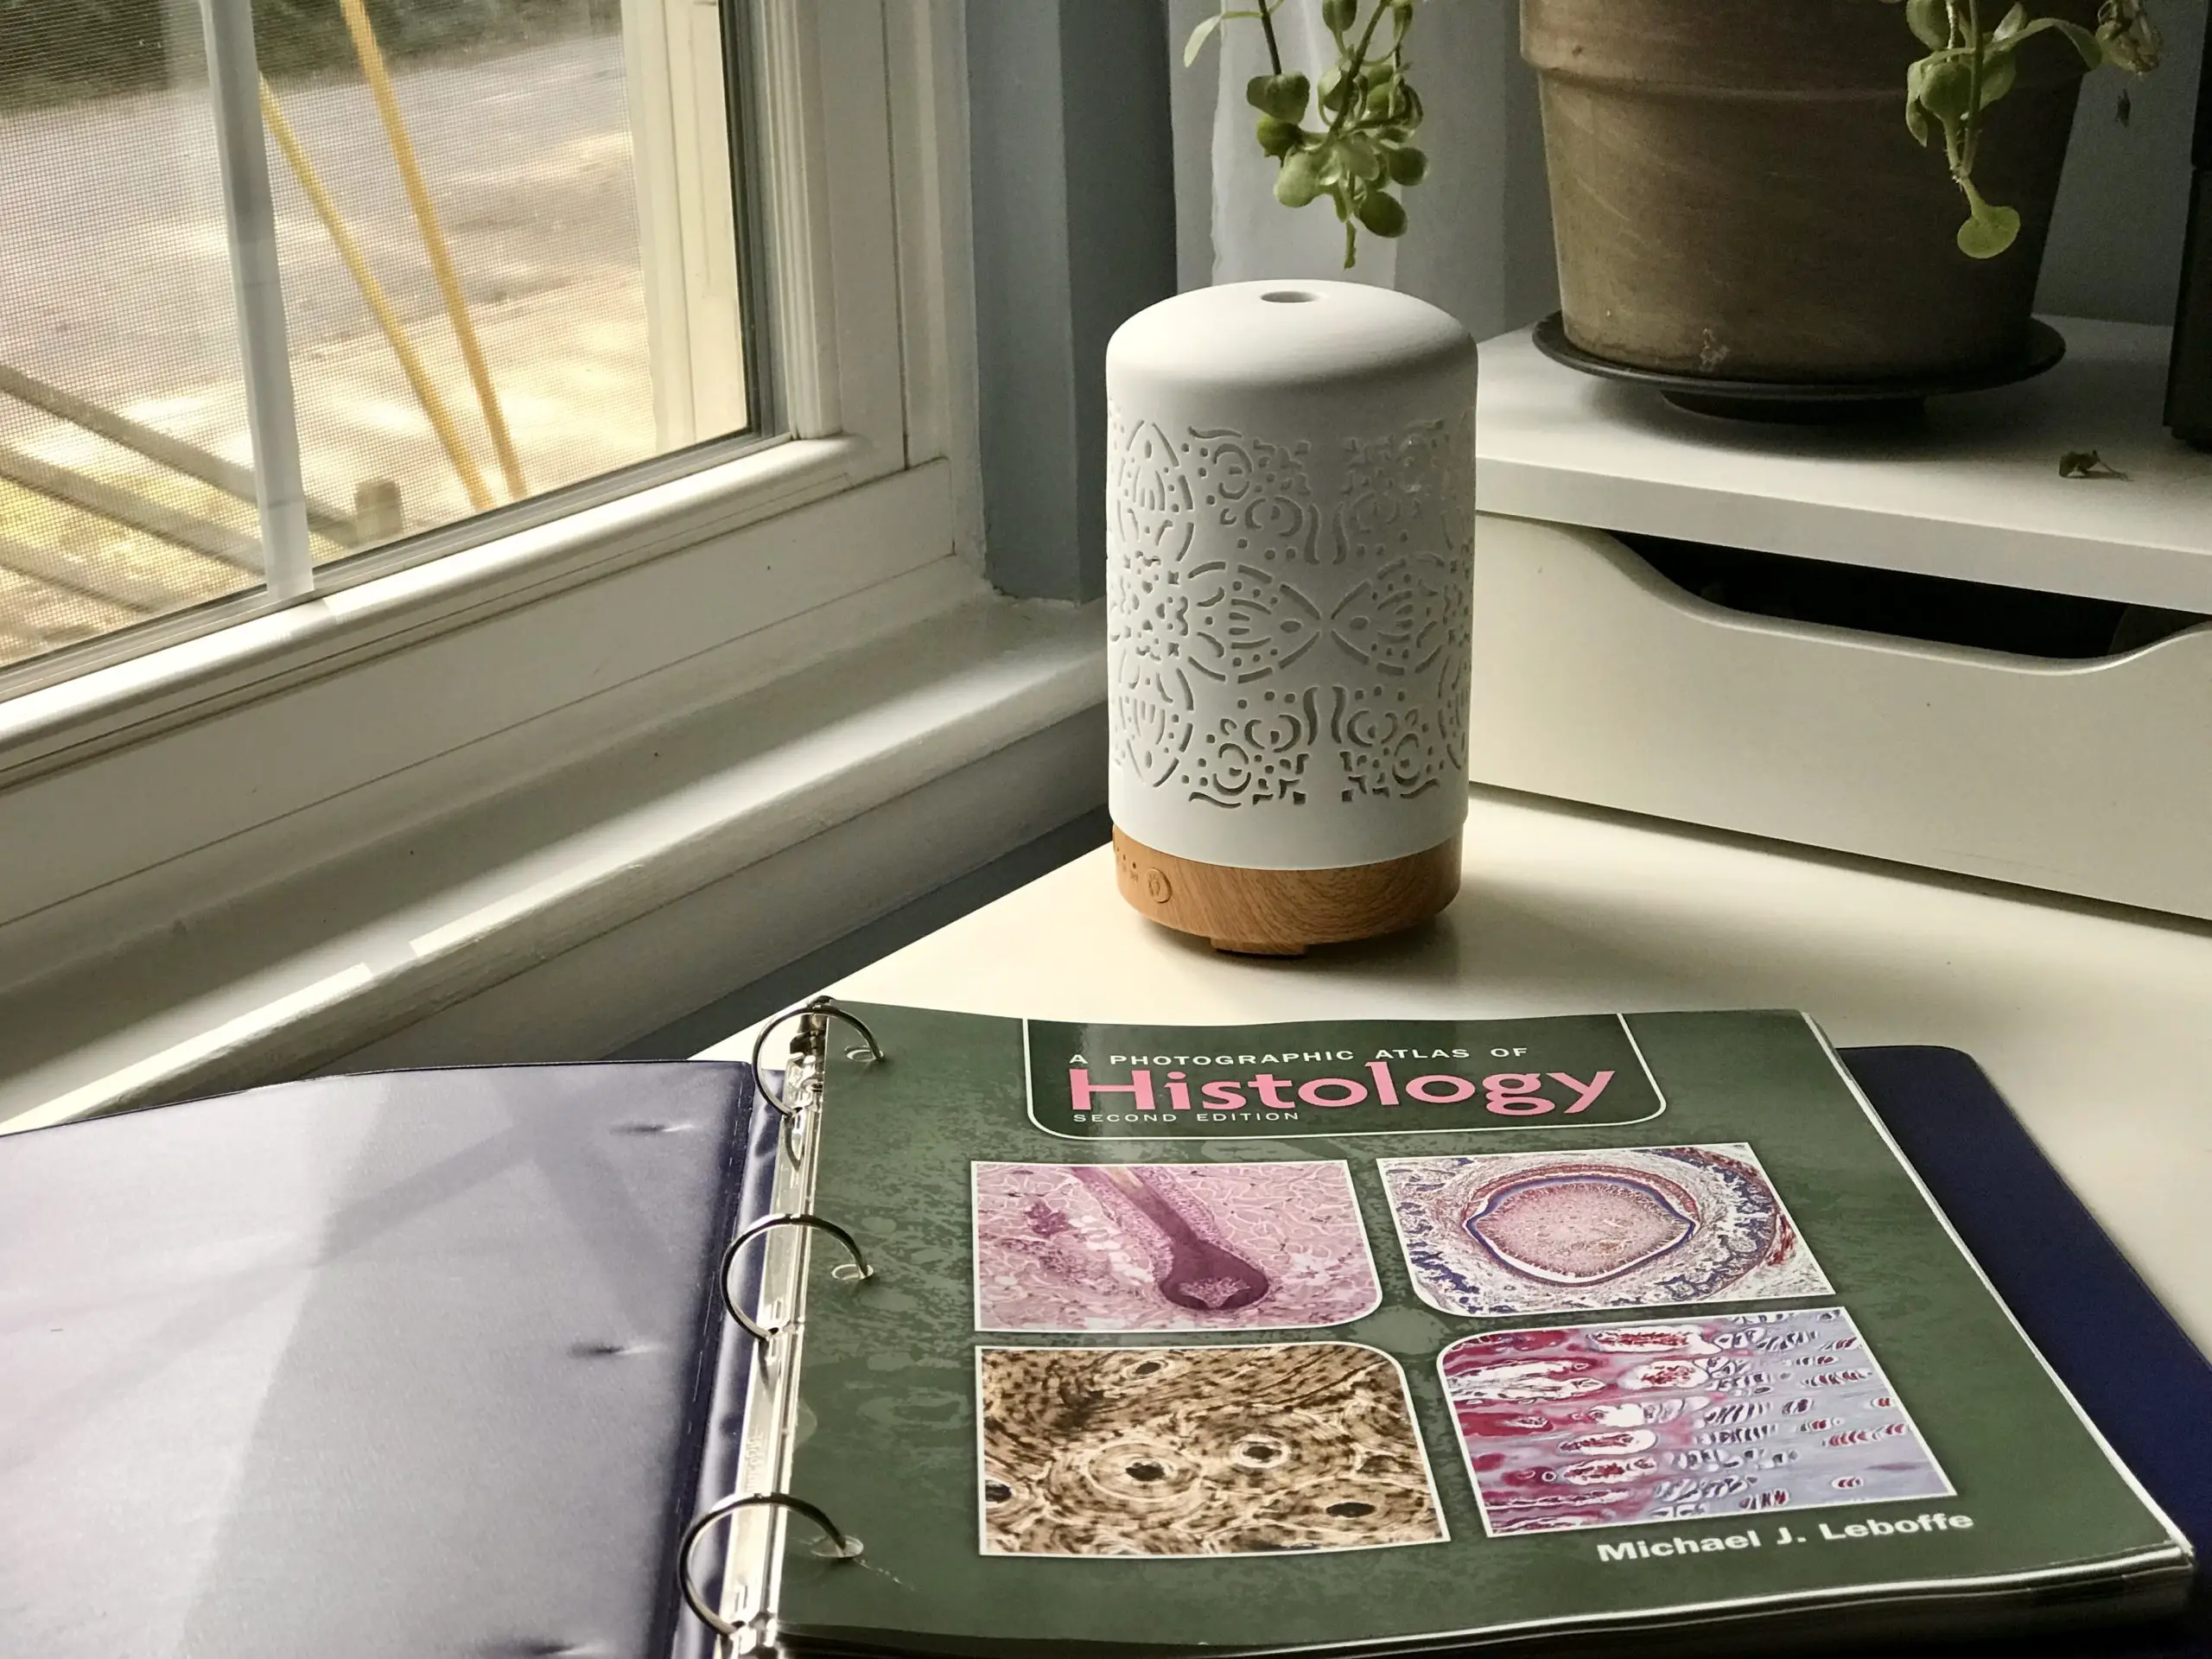 Histology book on a desk.